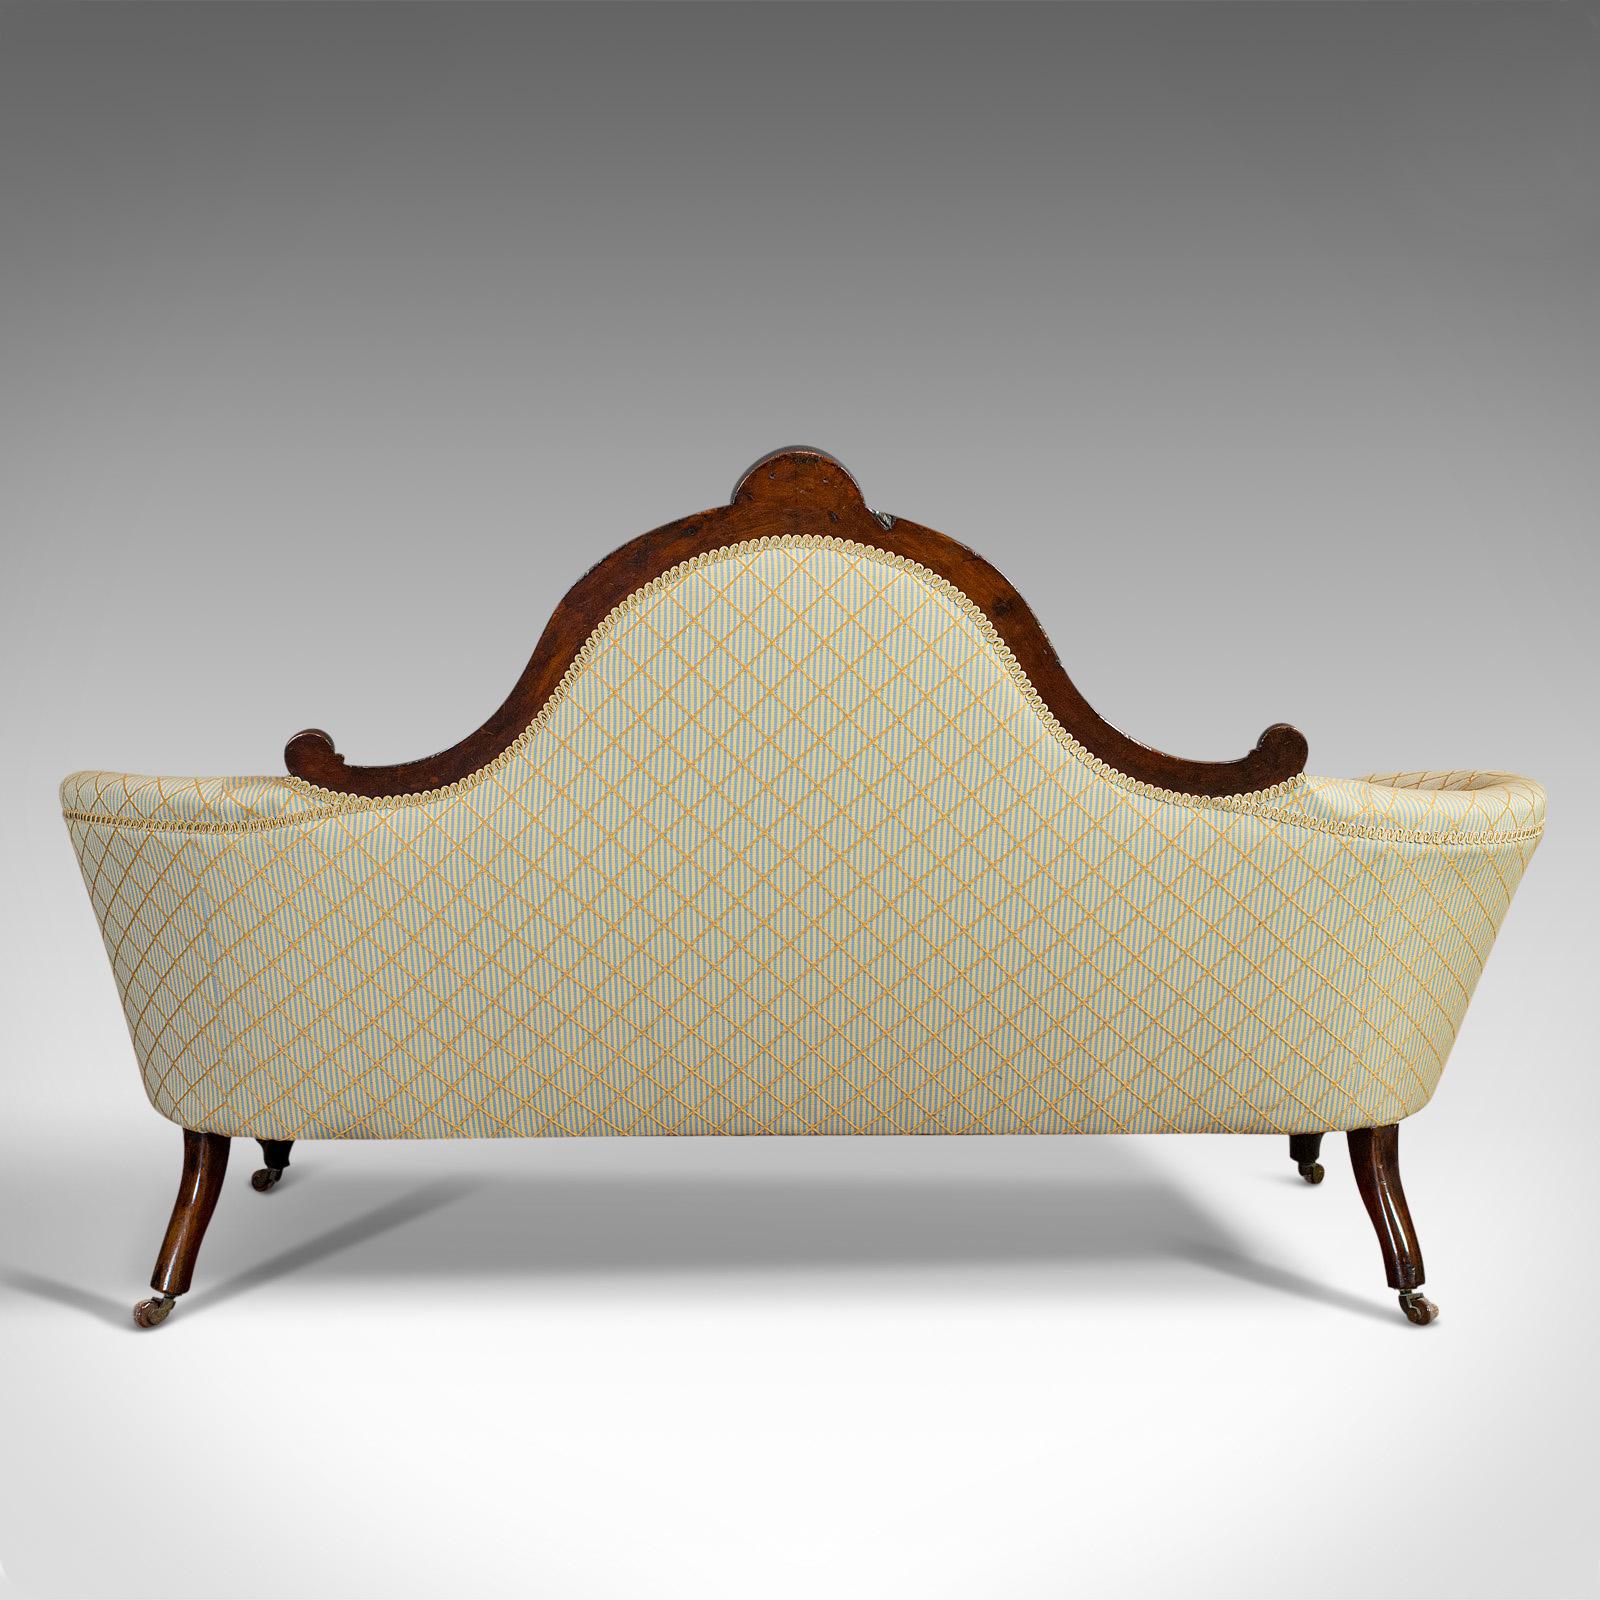 British Antique Spoon Back Sofa, English, Walnut, 2-Seat Settee, Early Victorian, 1840